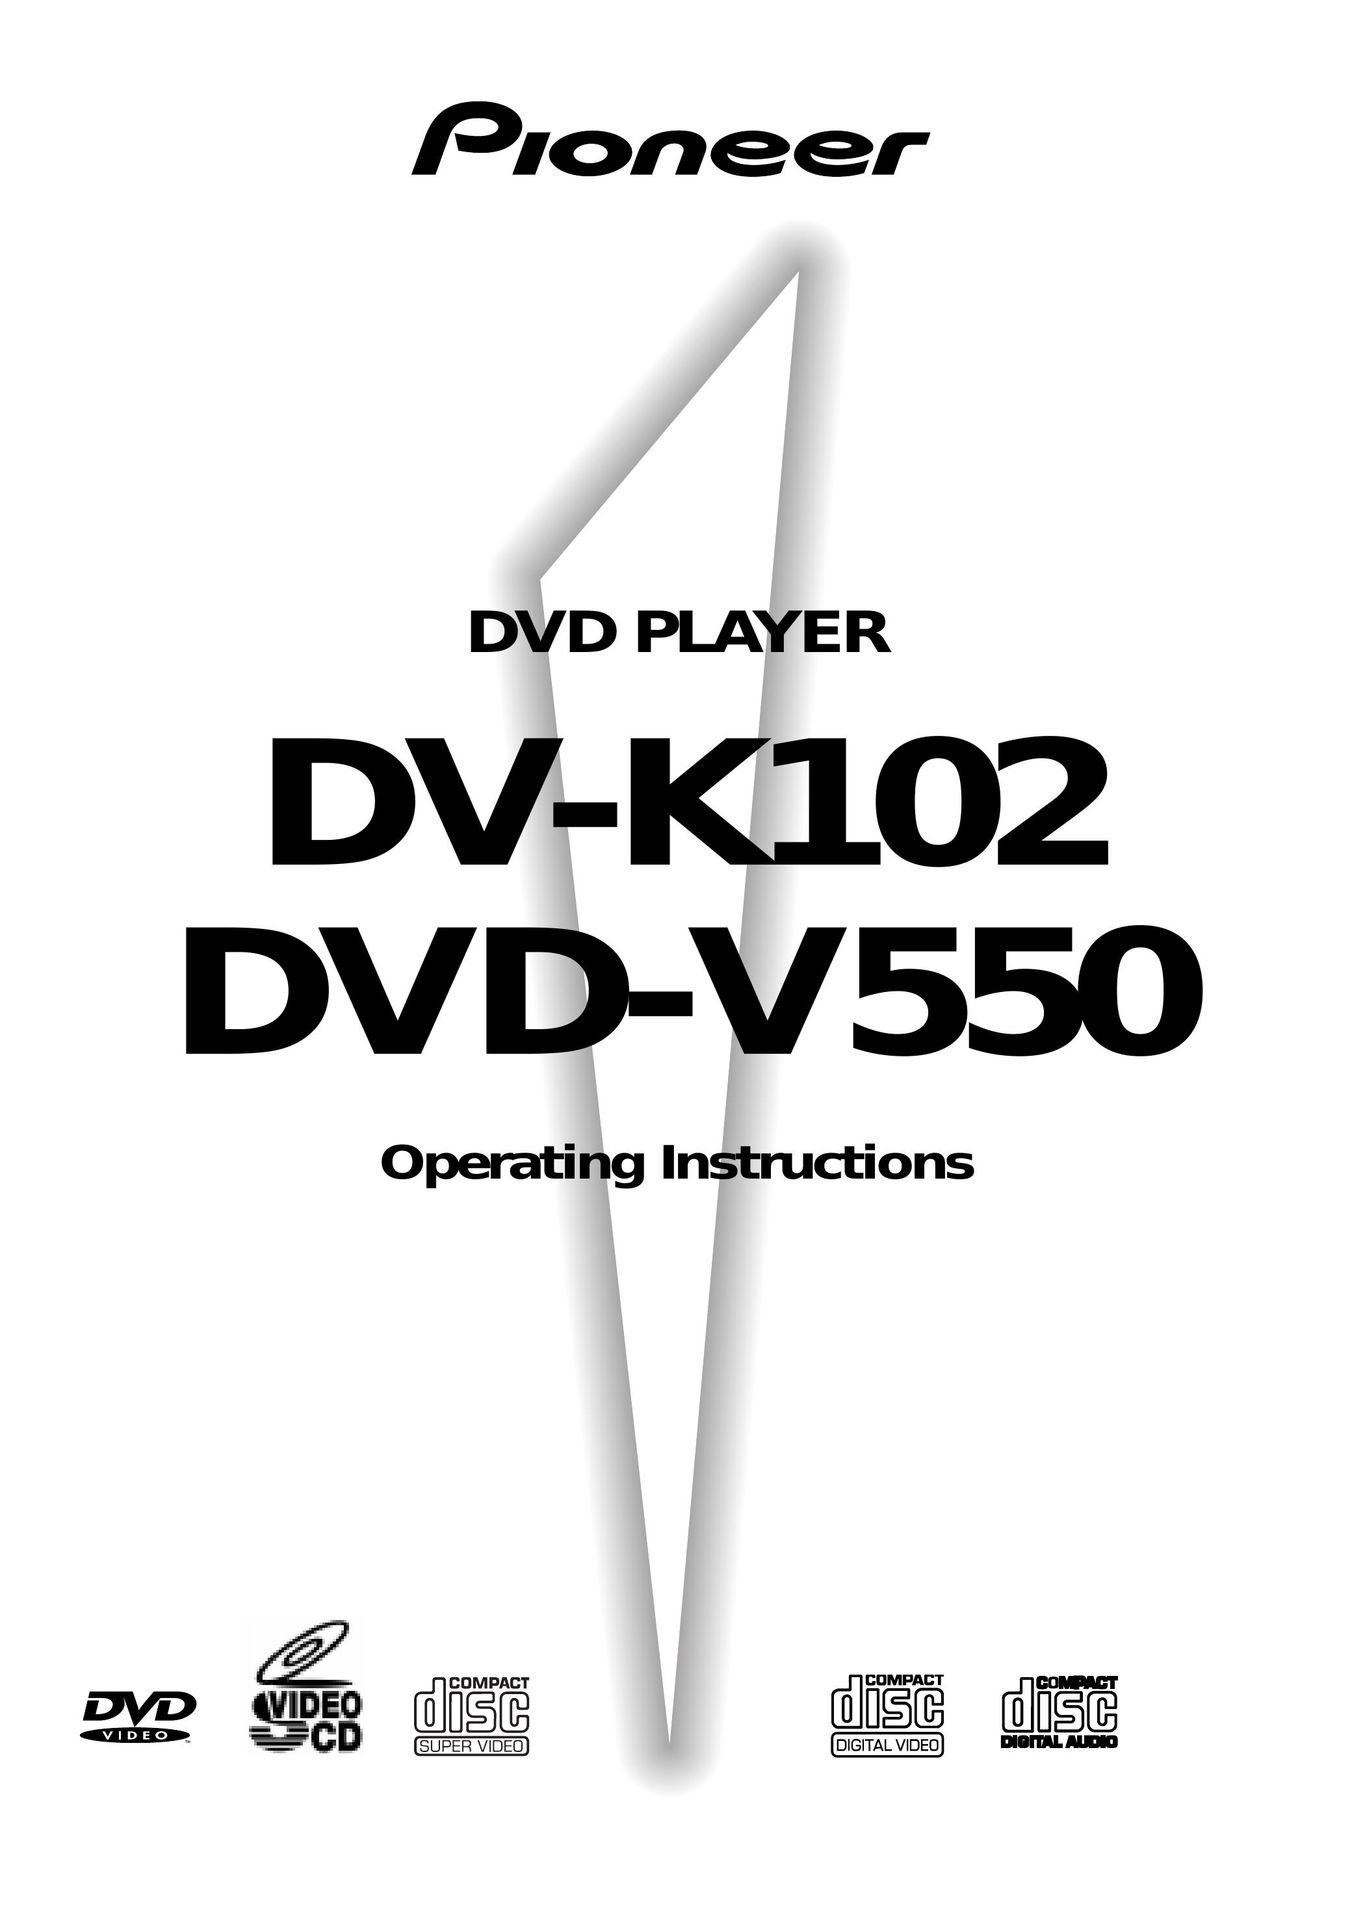 Pioneer DVD-V550 TV DVD Combo User Manual